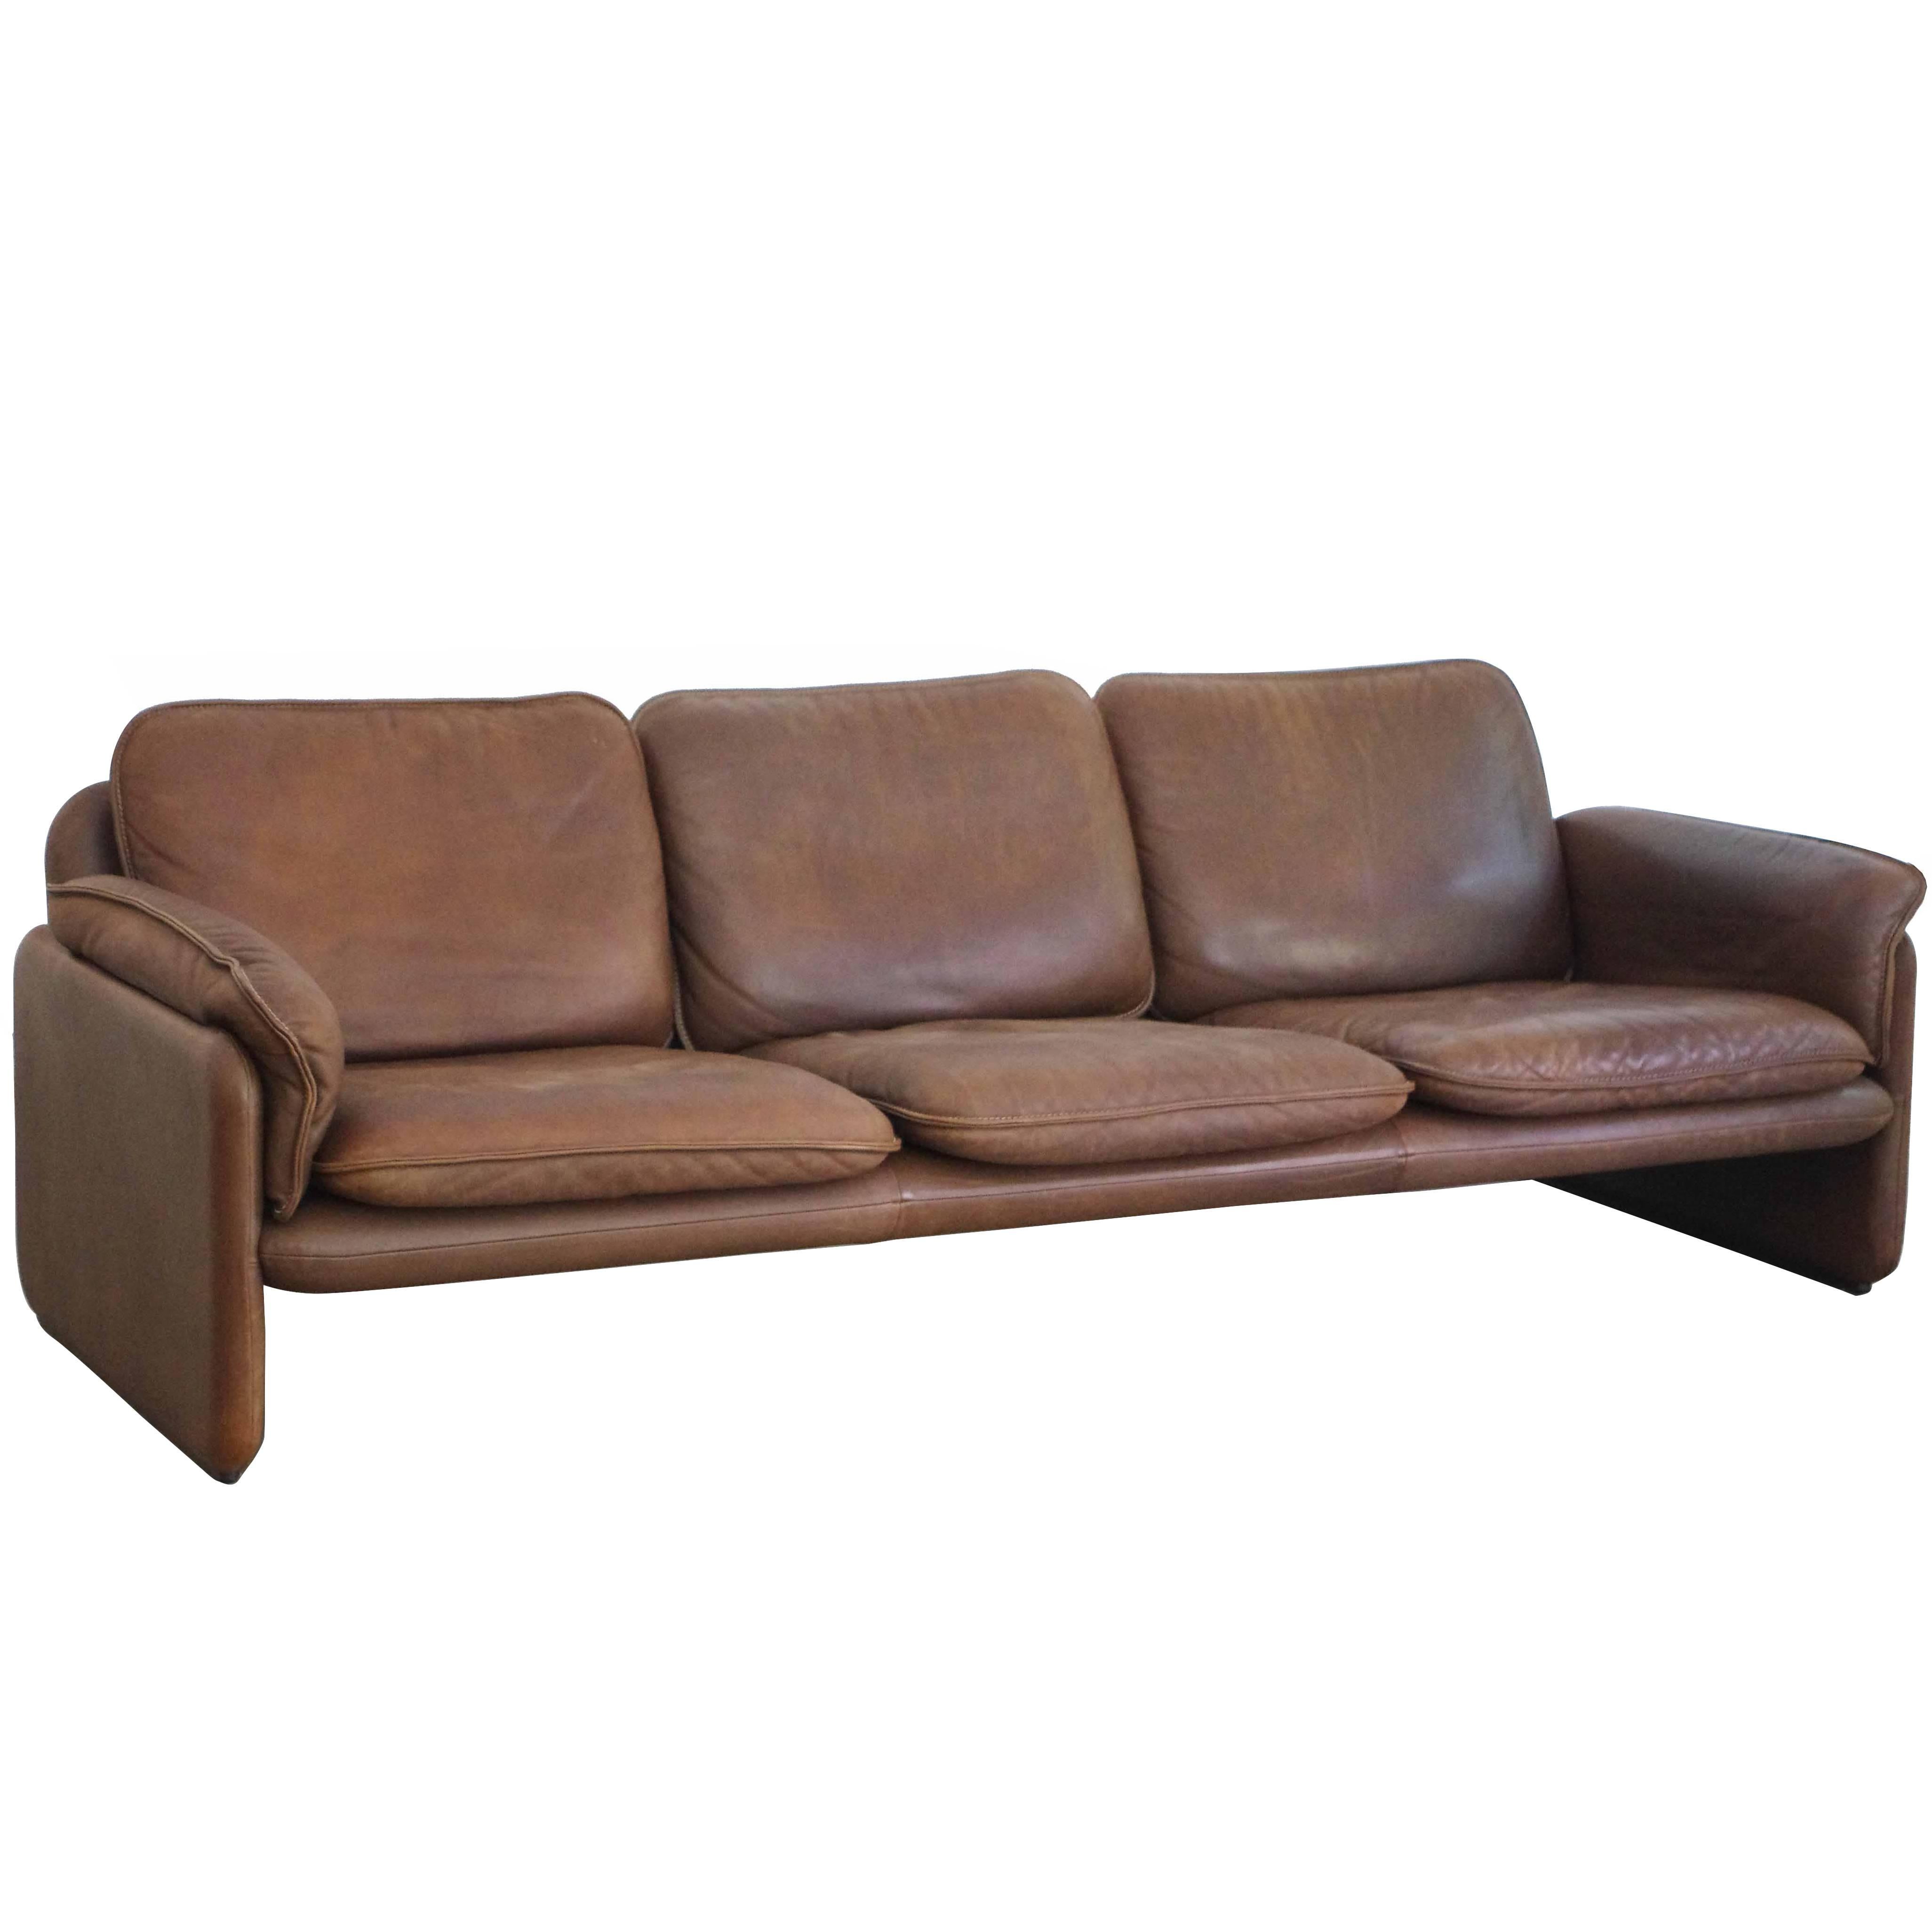 Ds-61 Leather Sofa by De Sede